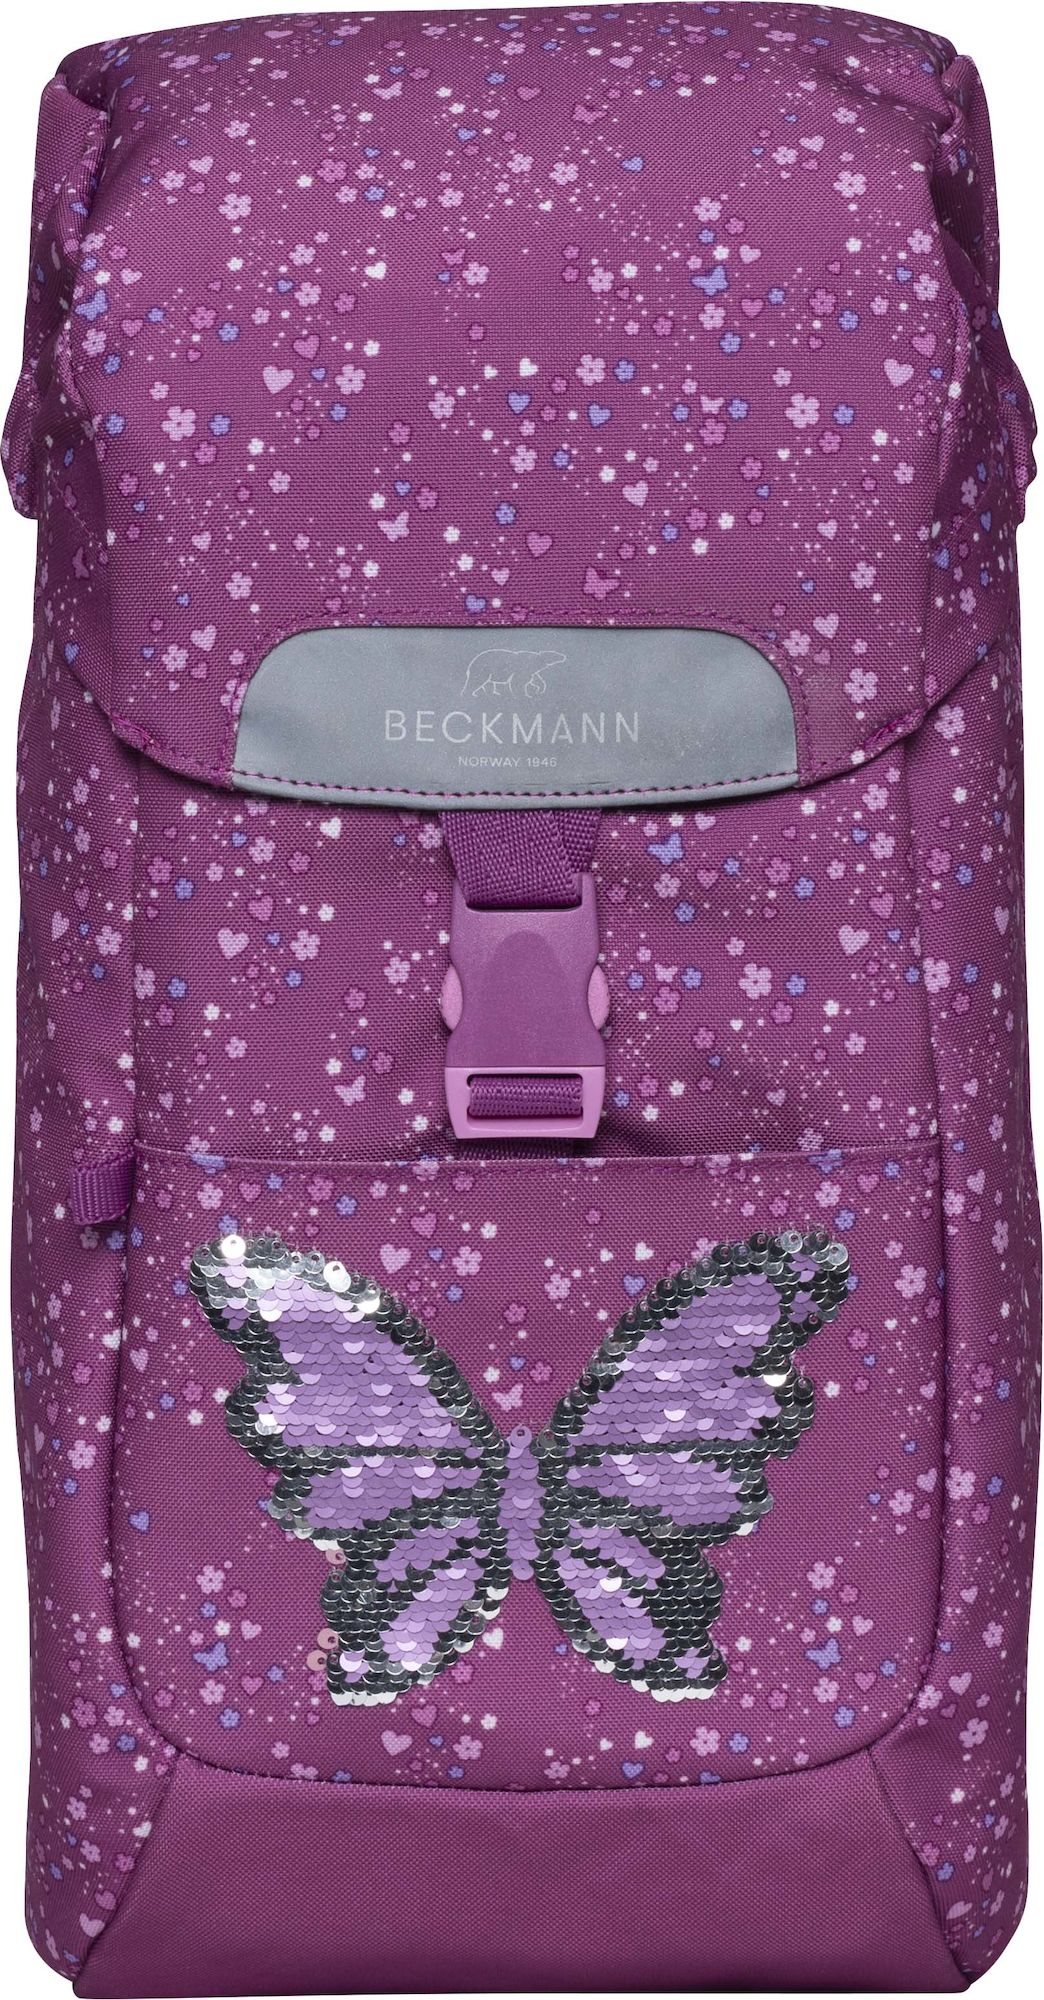 Beckmann Classic Mini Ryggsäck 12L, Butterfly